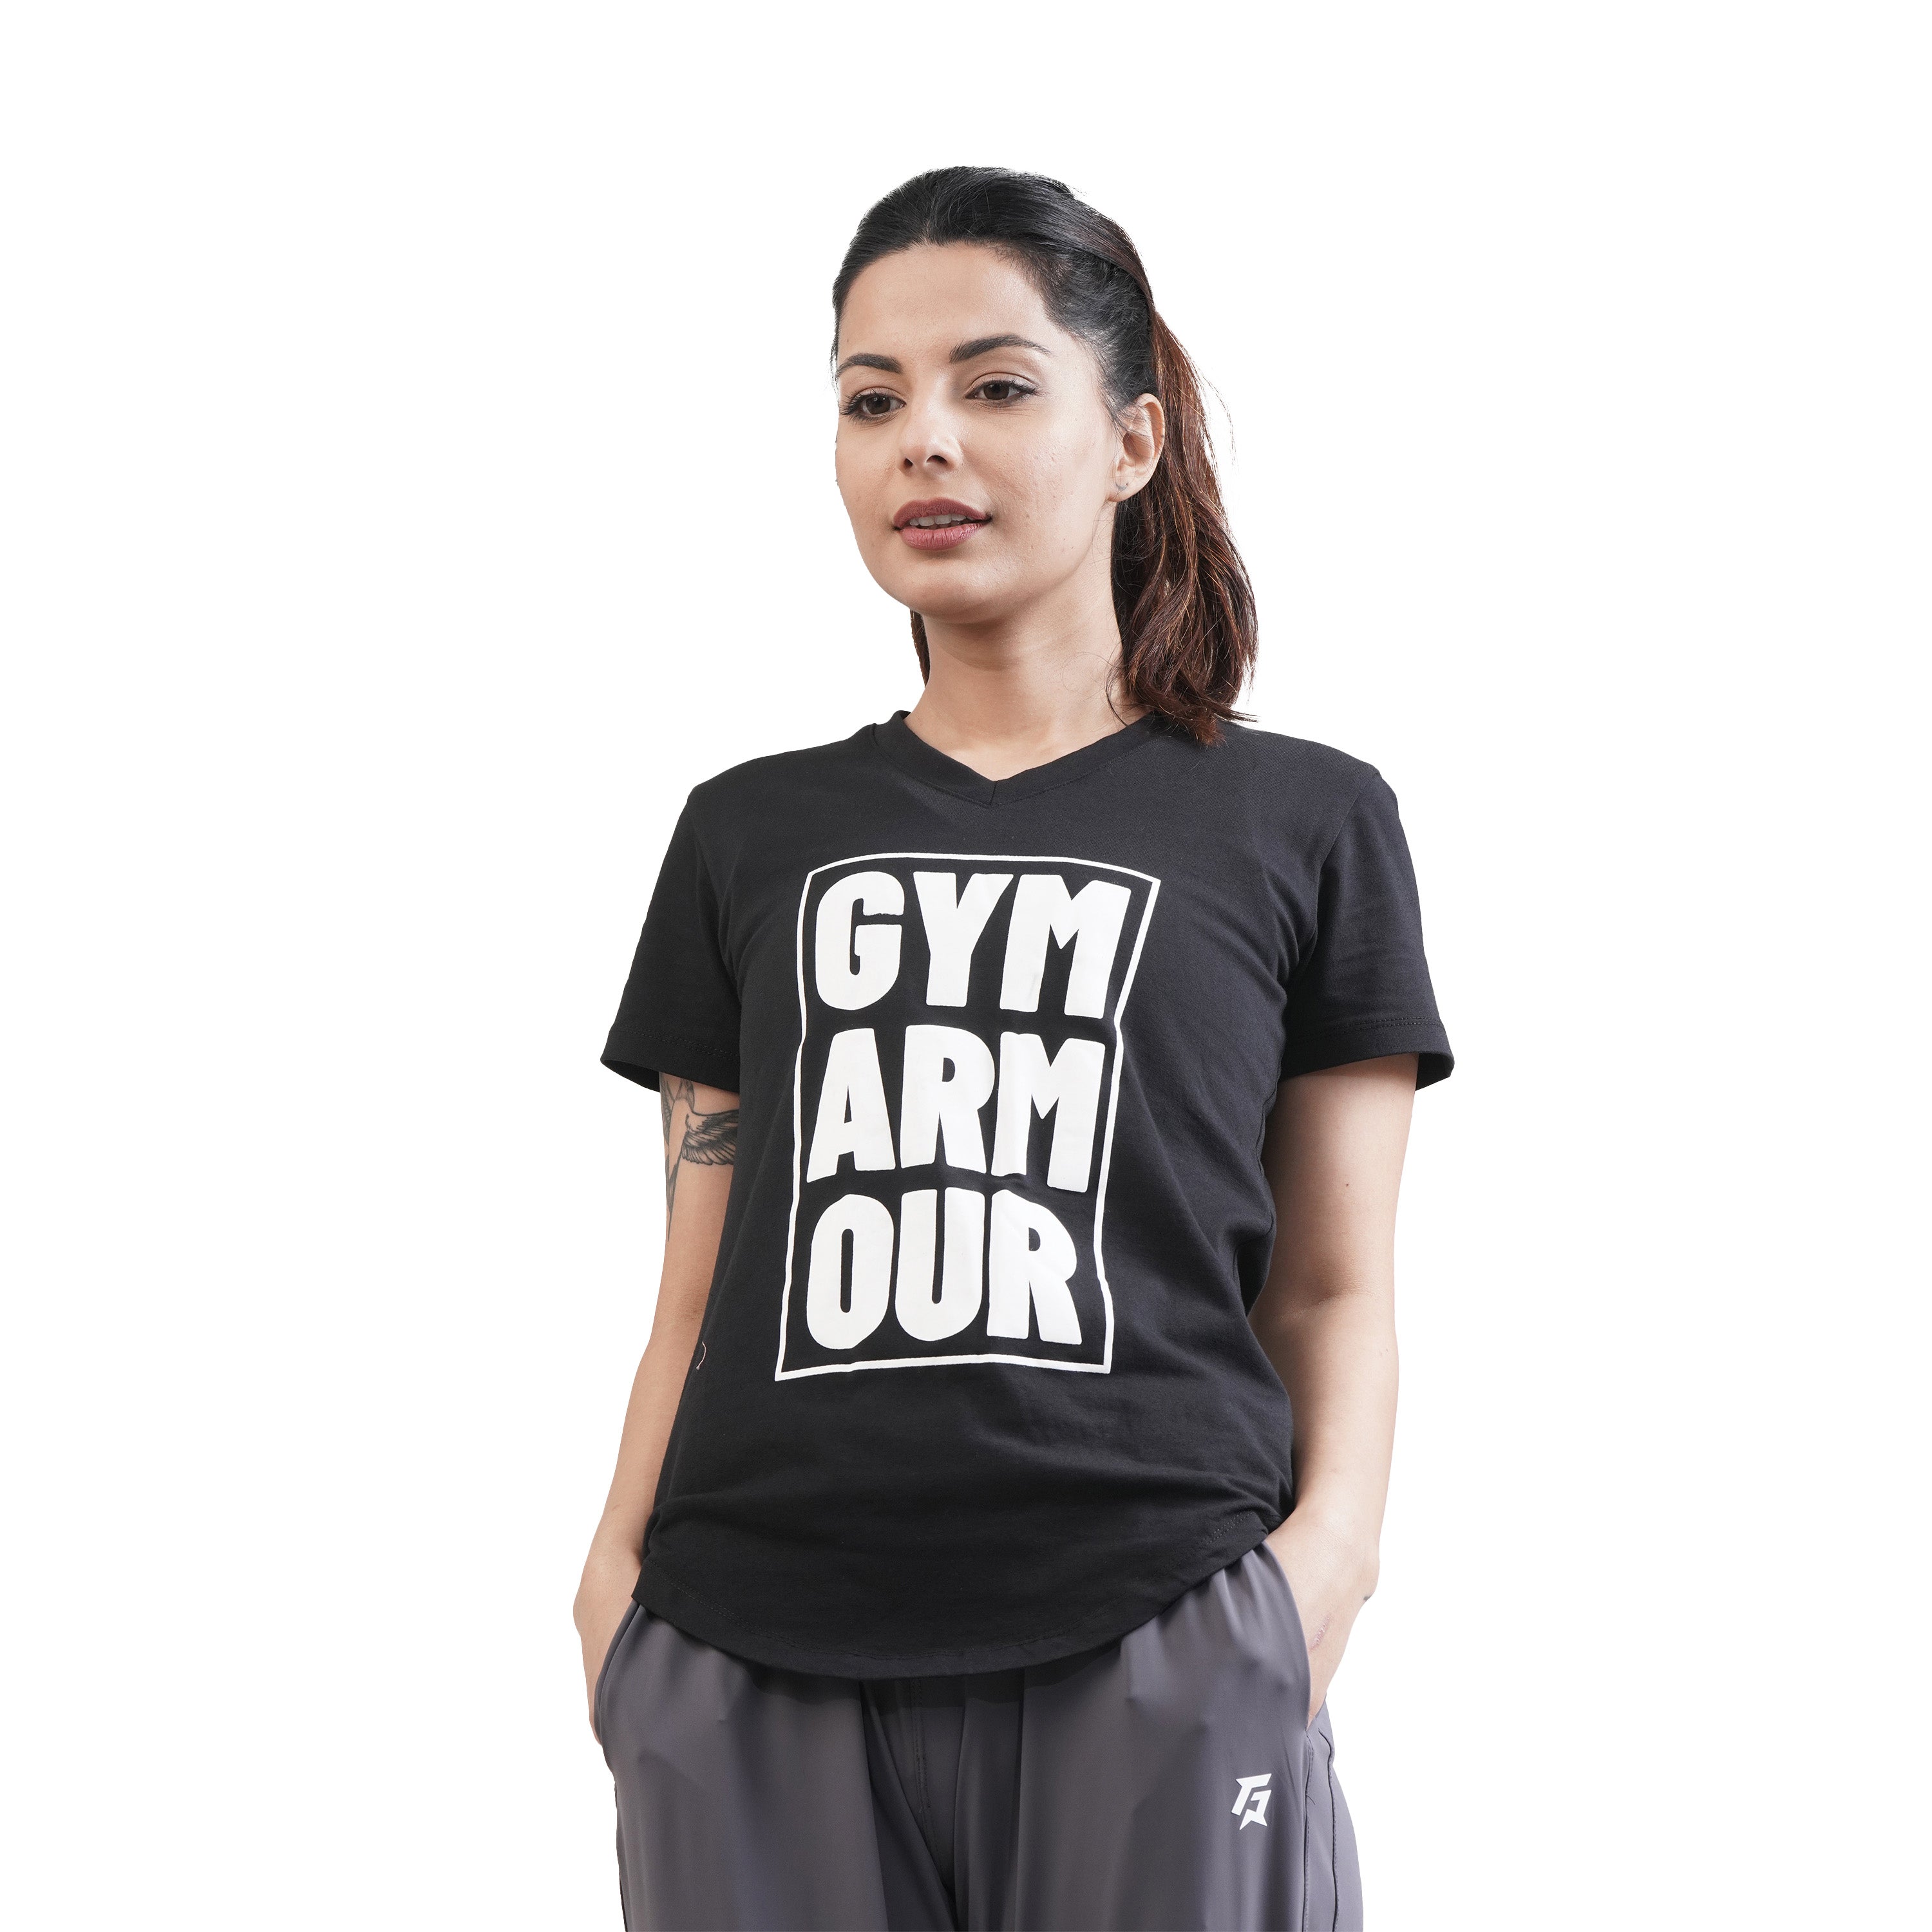 Gym-Arm-Our Tee (Black)